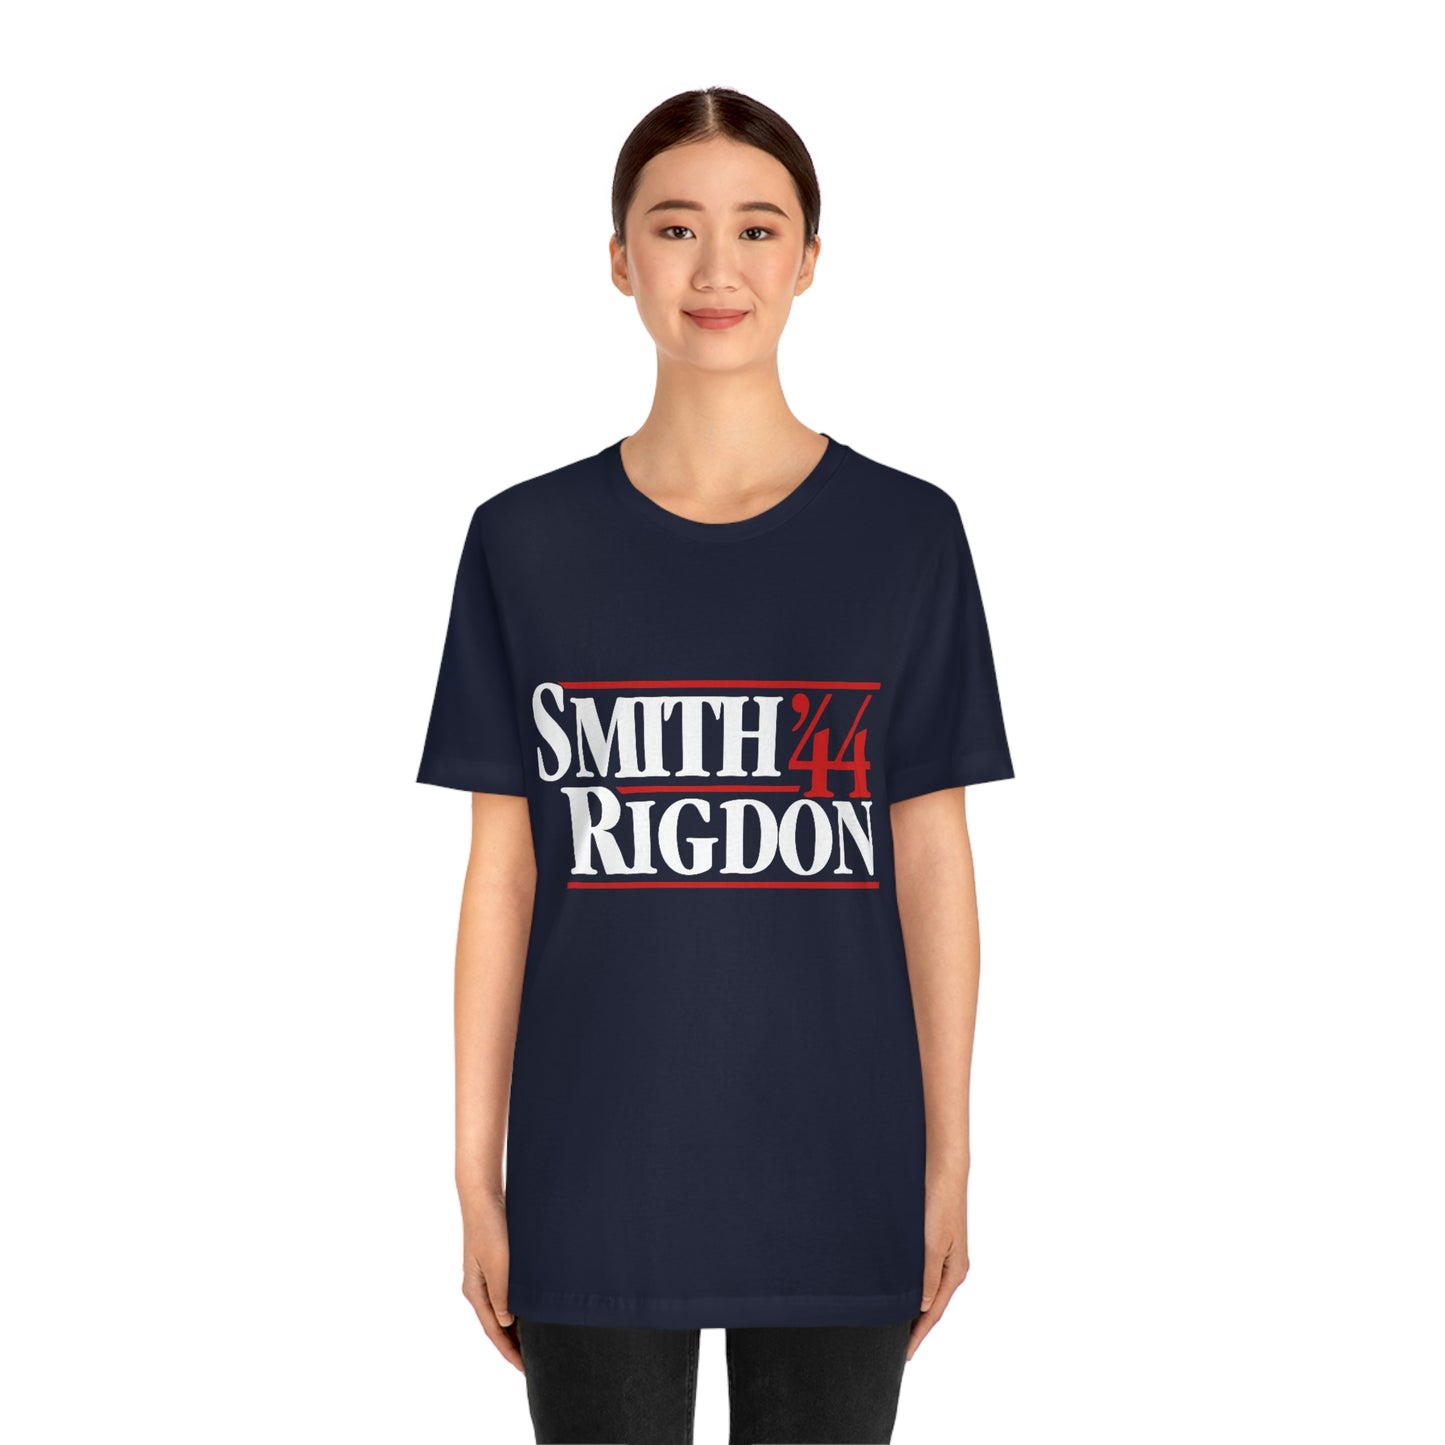 Smith & Rigdon '44 Presidential Campaign T-Shirt